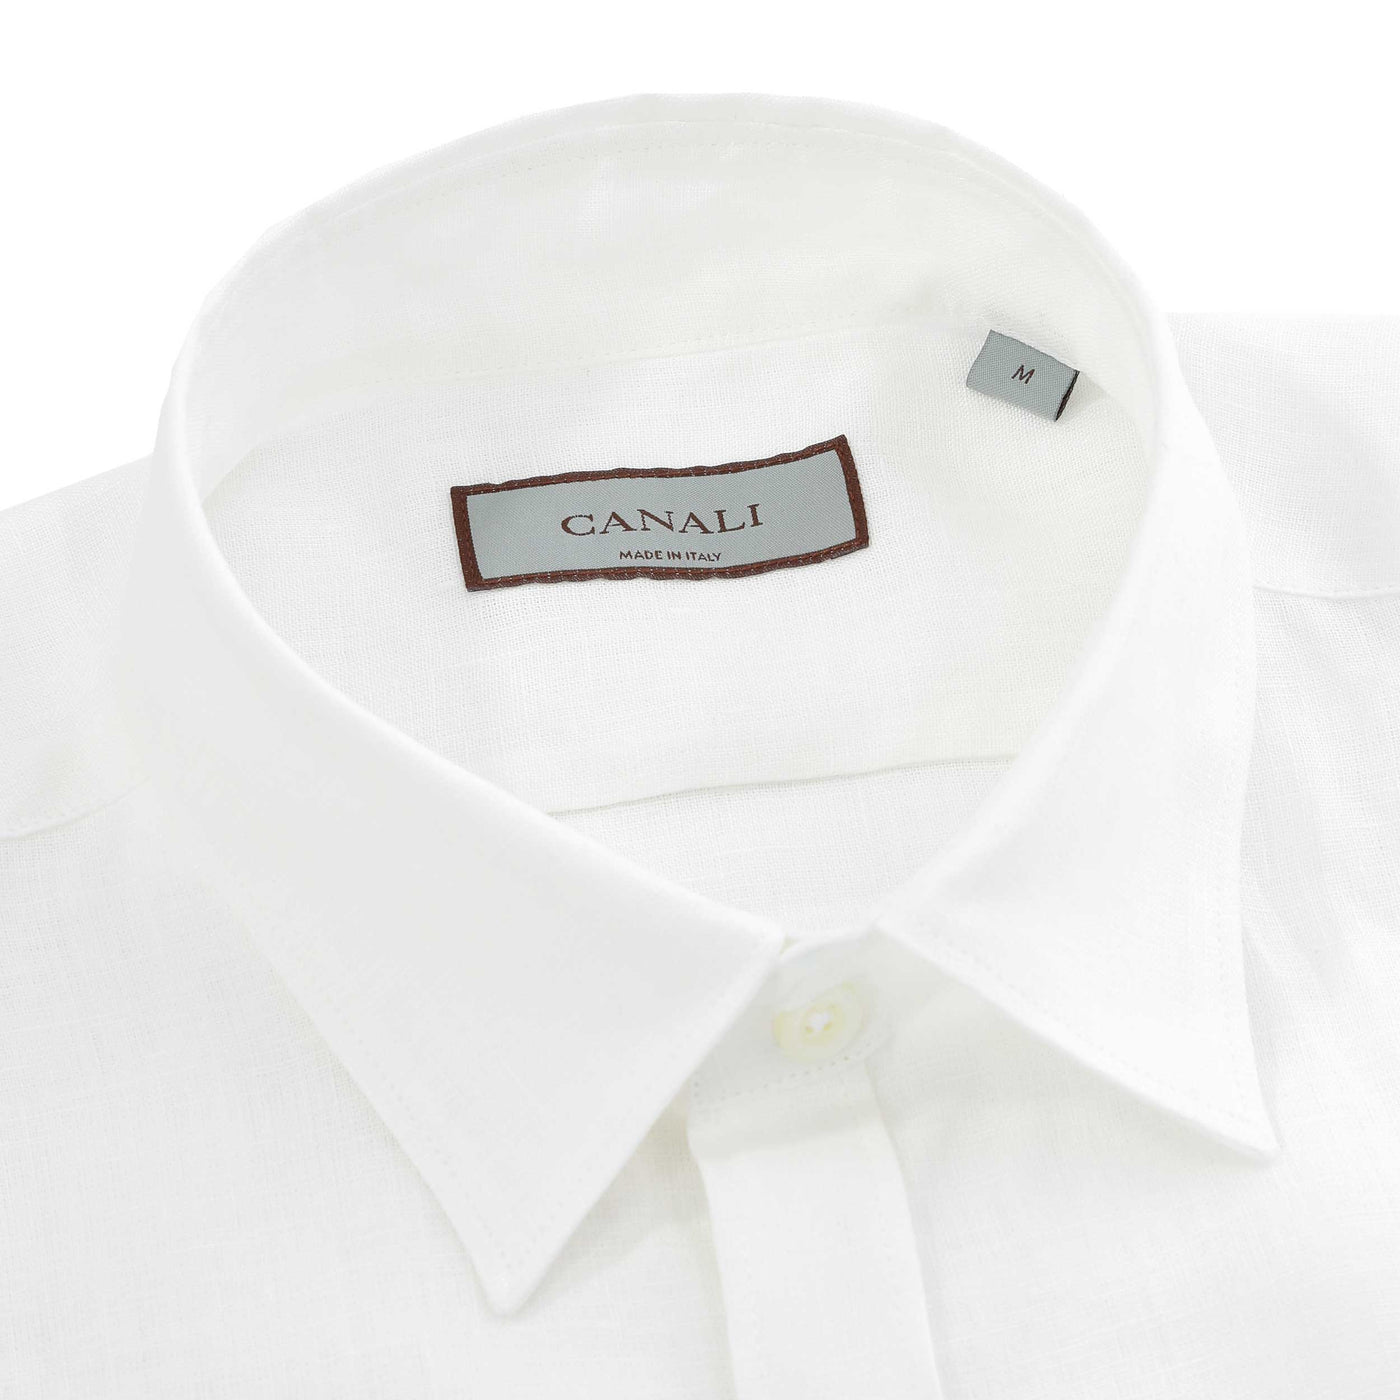 Canali Linen Shirt in White Collar